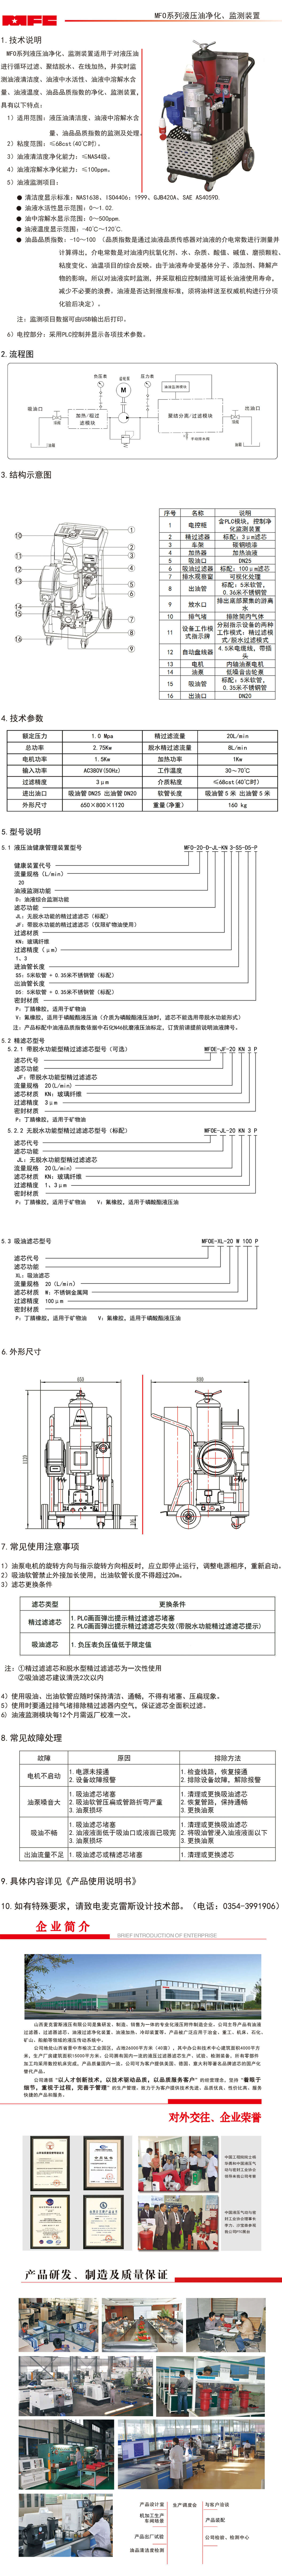 MFO系列液壓油凈化監測裝置2.jpg